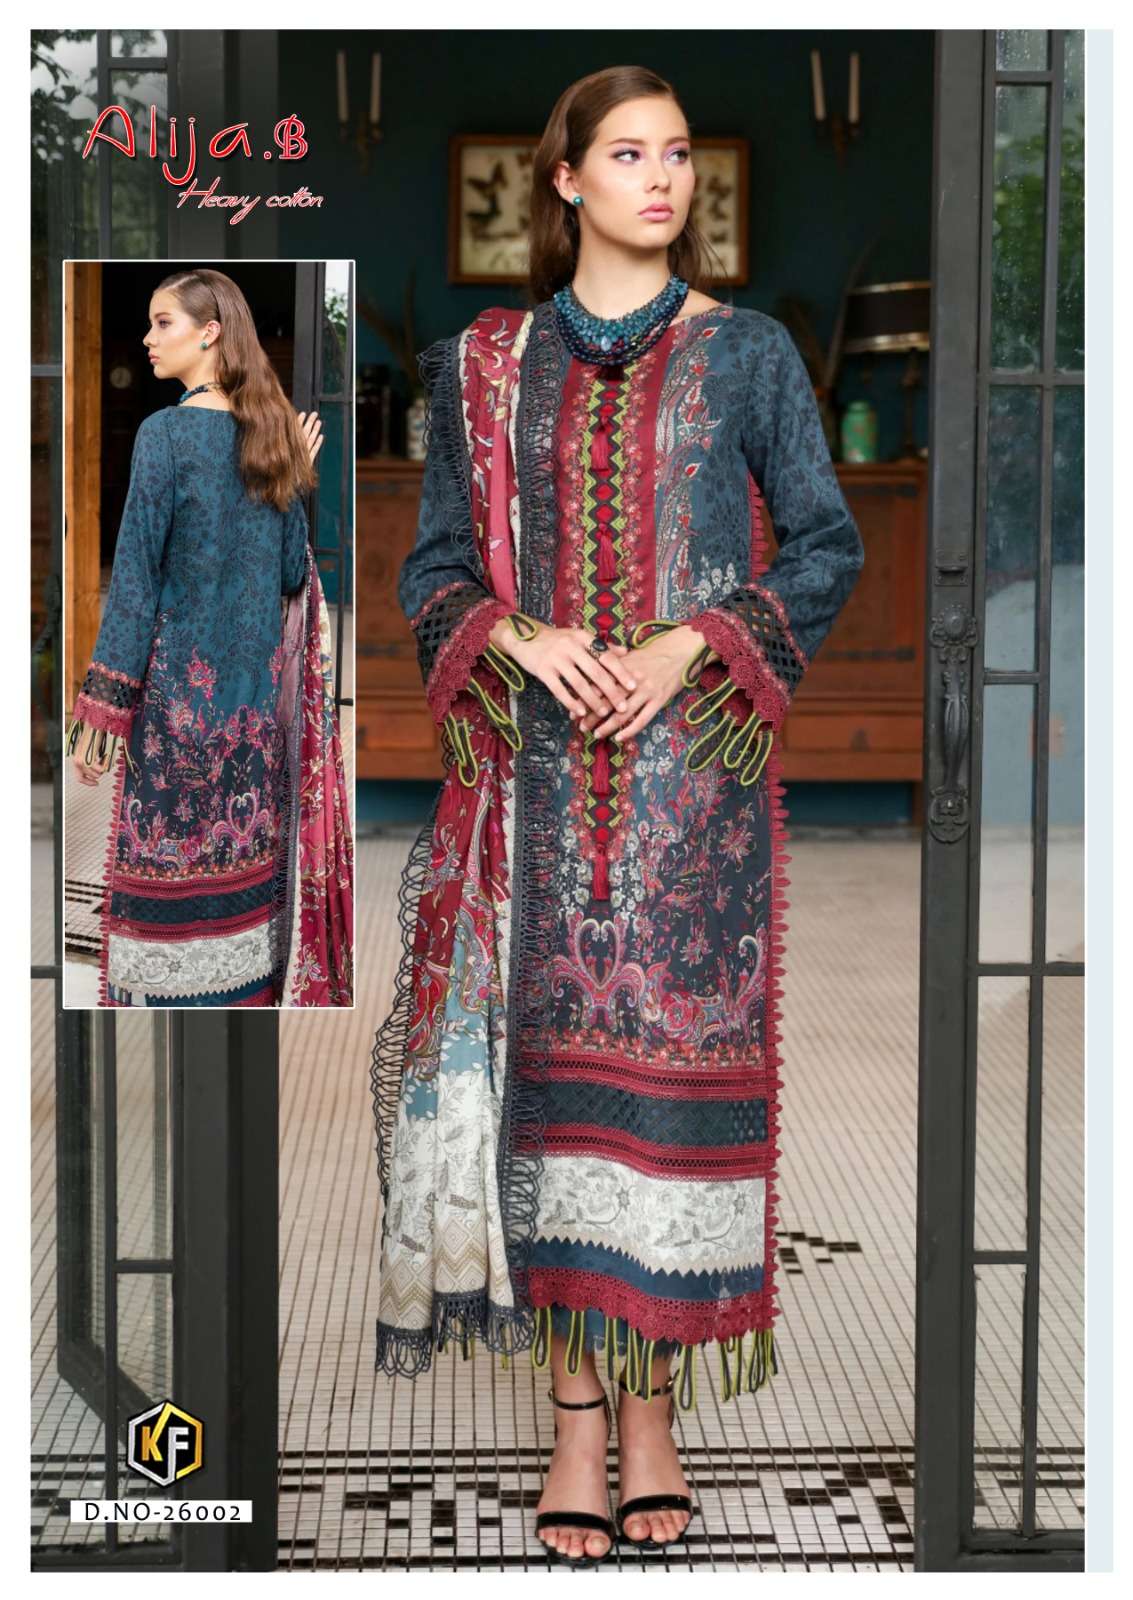 Keval Alija B Vol 26 Karachi Cotton Dress Material Wholesale catalog